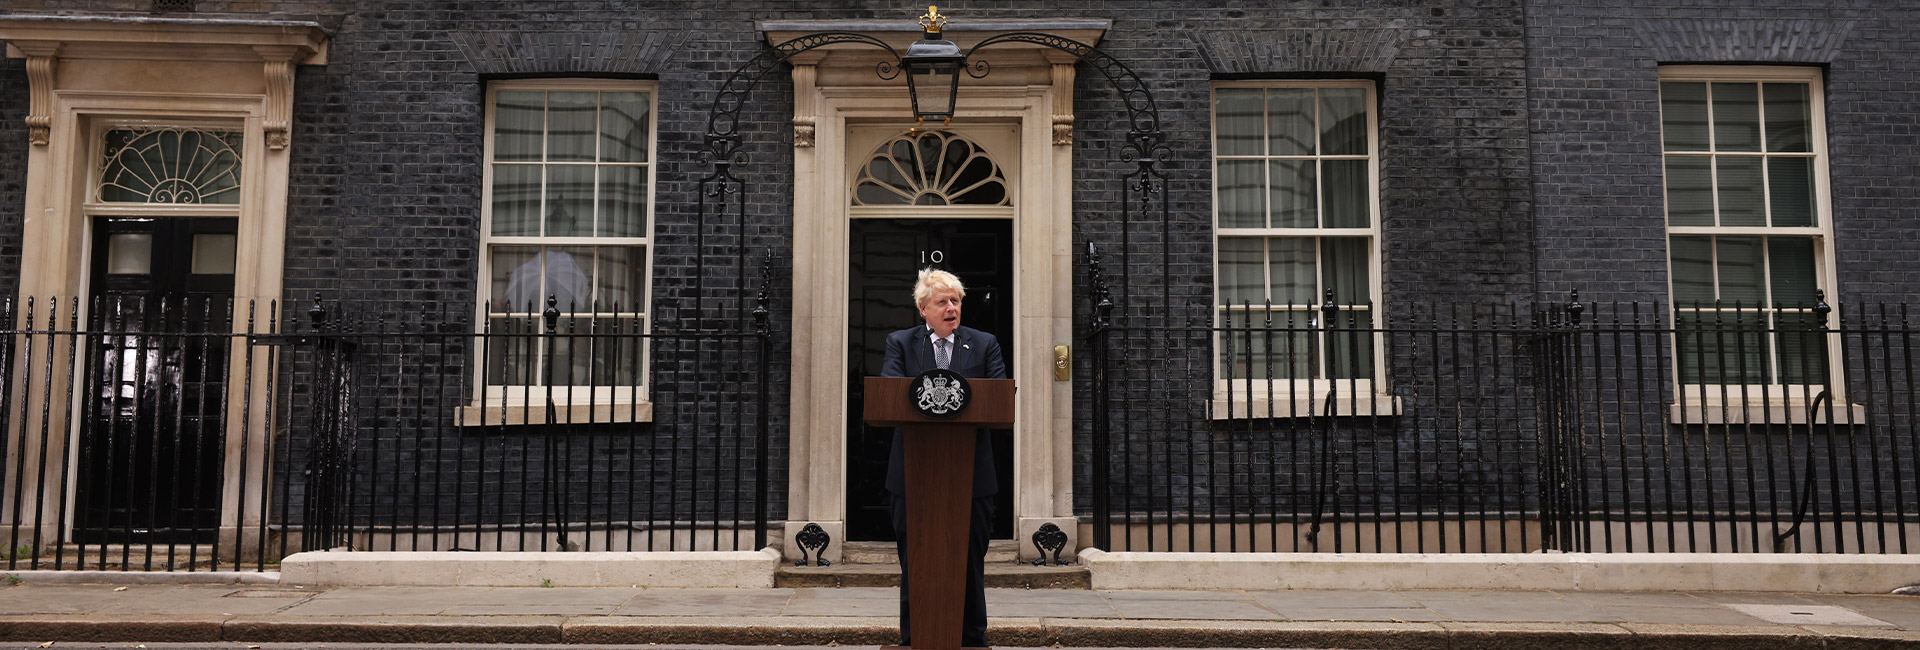 Boris Johnson speaking outside number 10 Downing Street